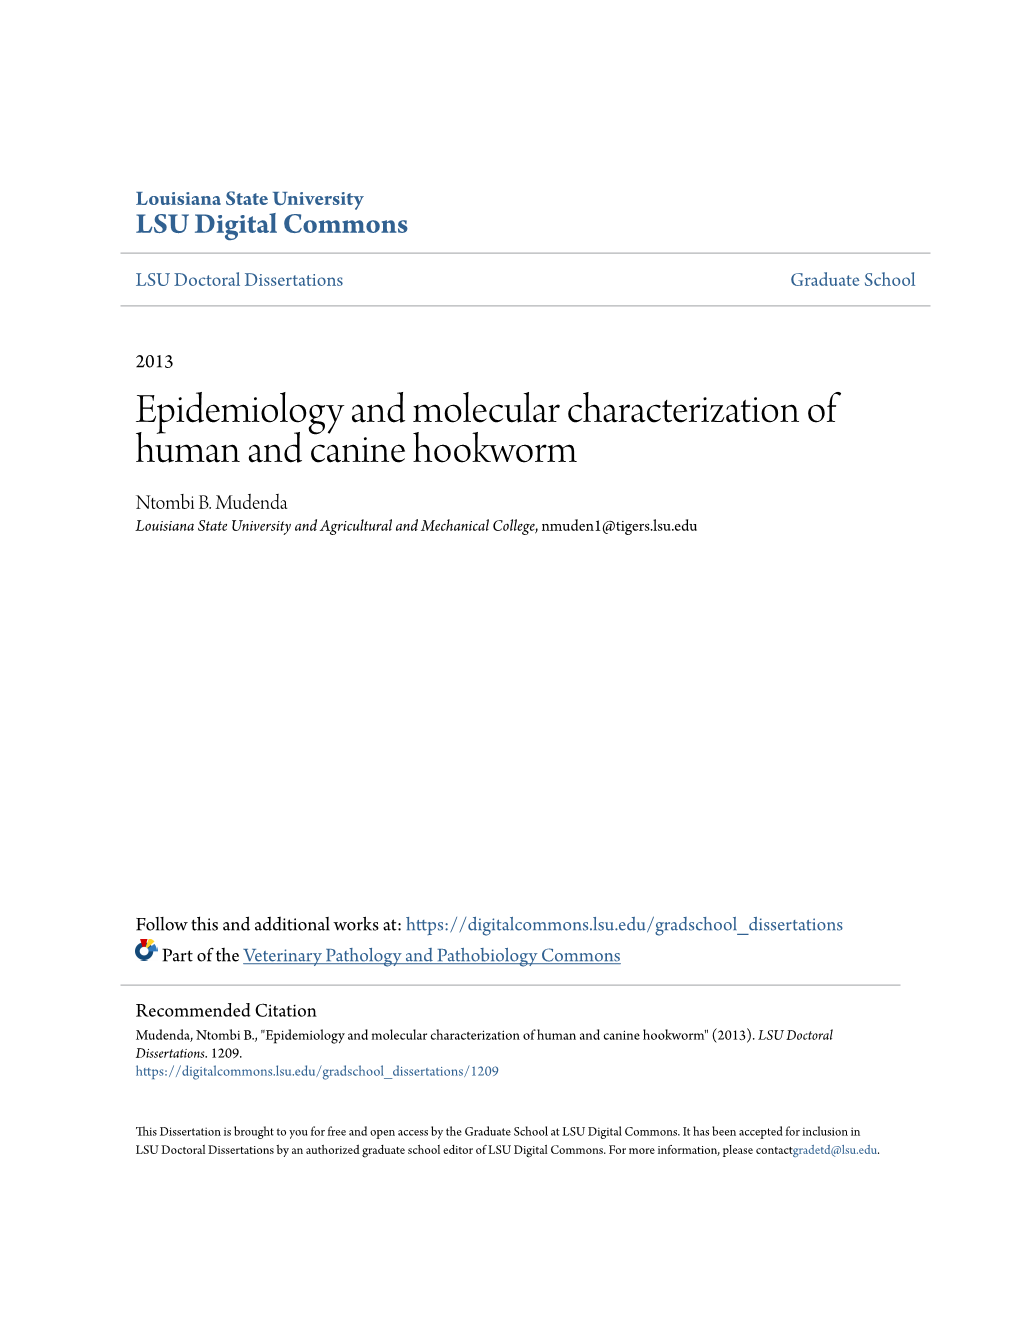 Epidemiology and Molecular Characterization of Human and Canine Hookworm Ntombi B